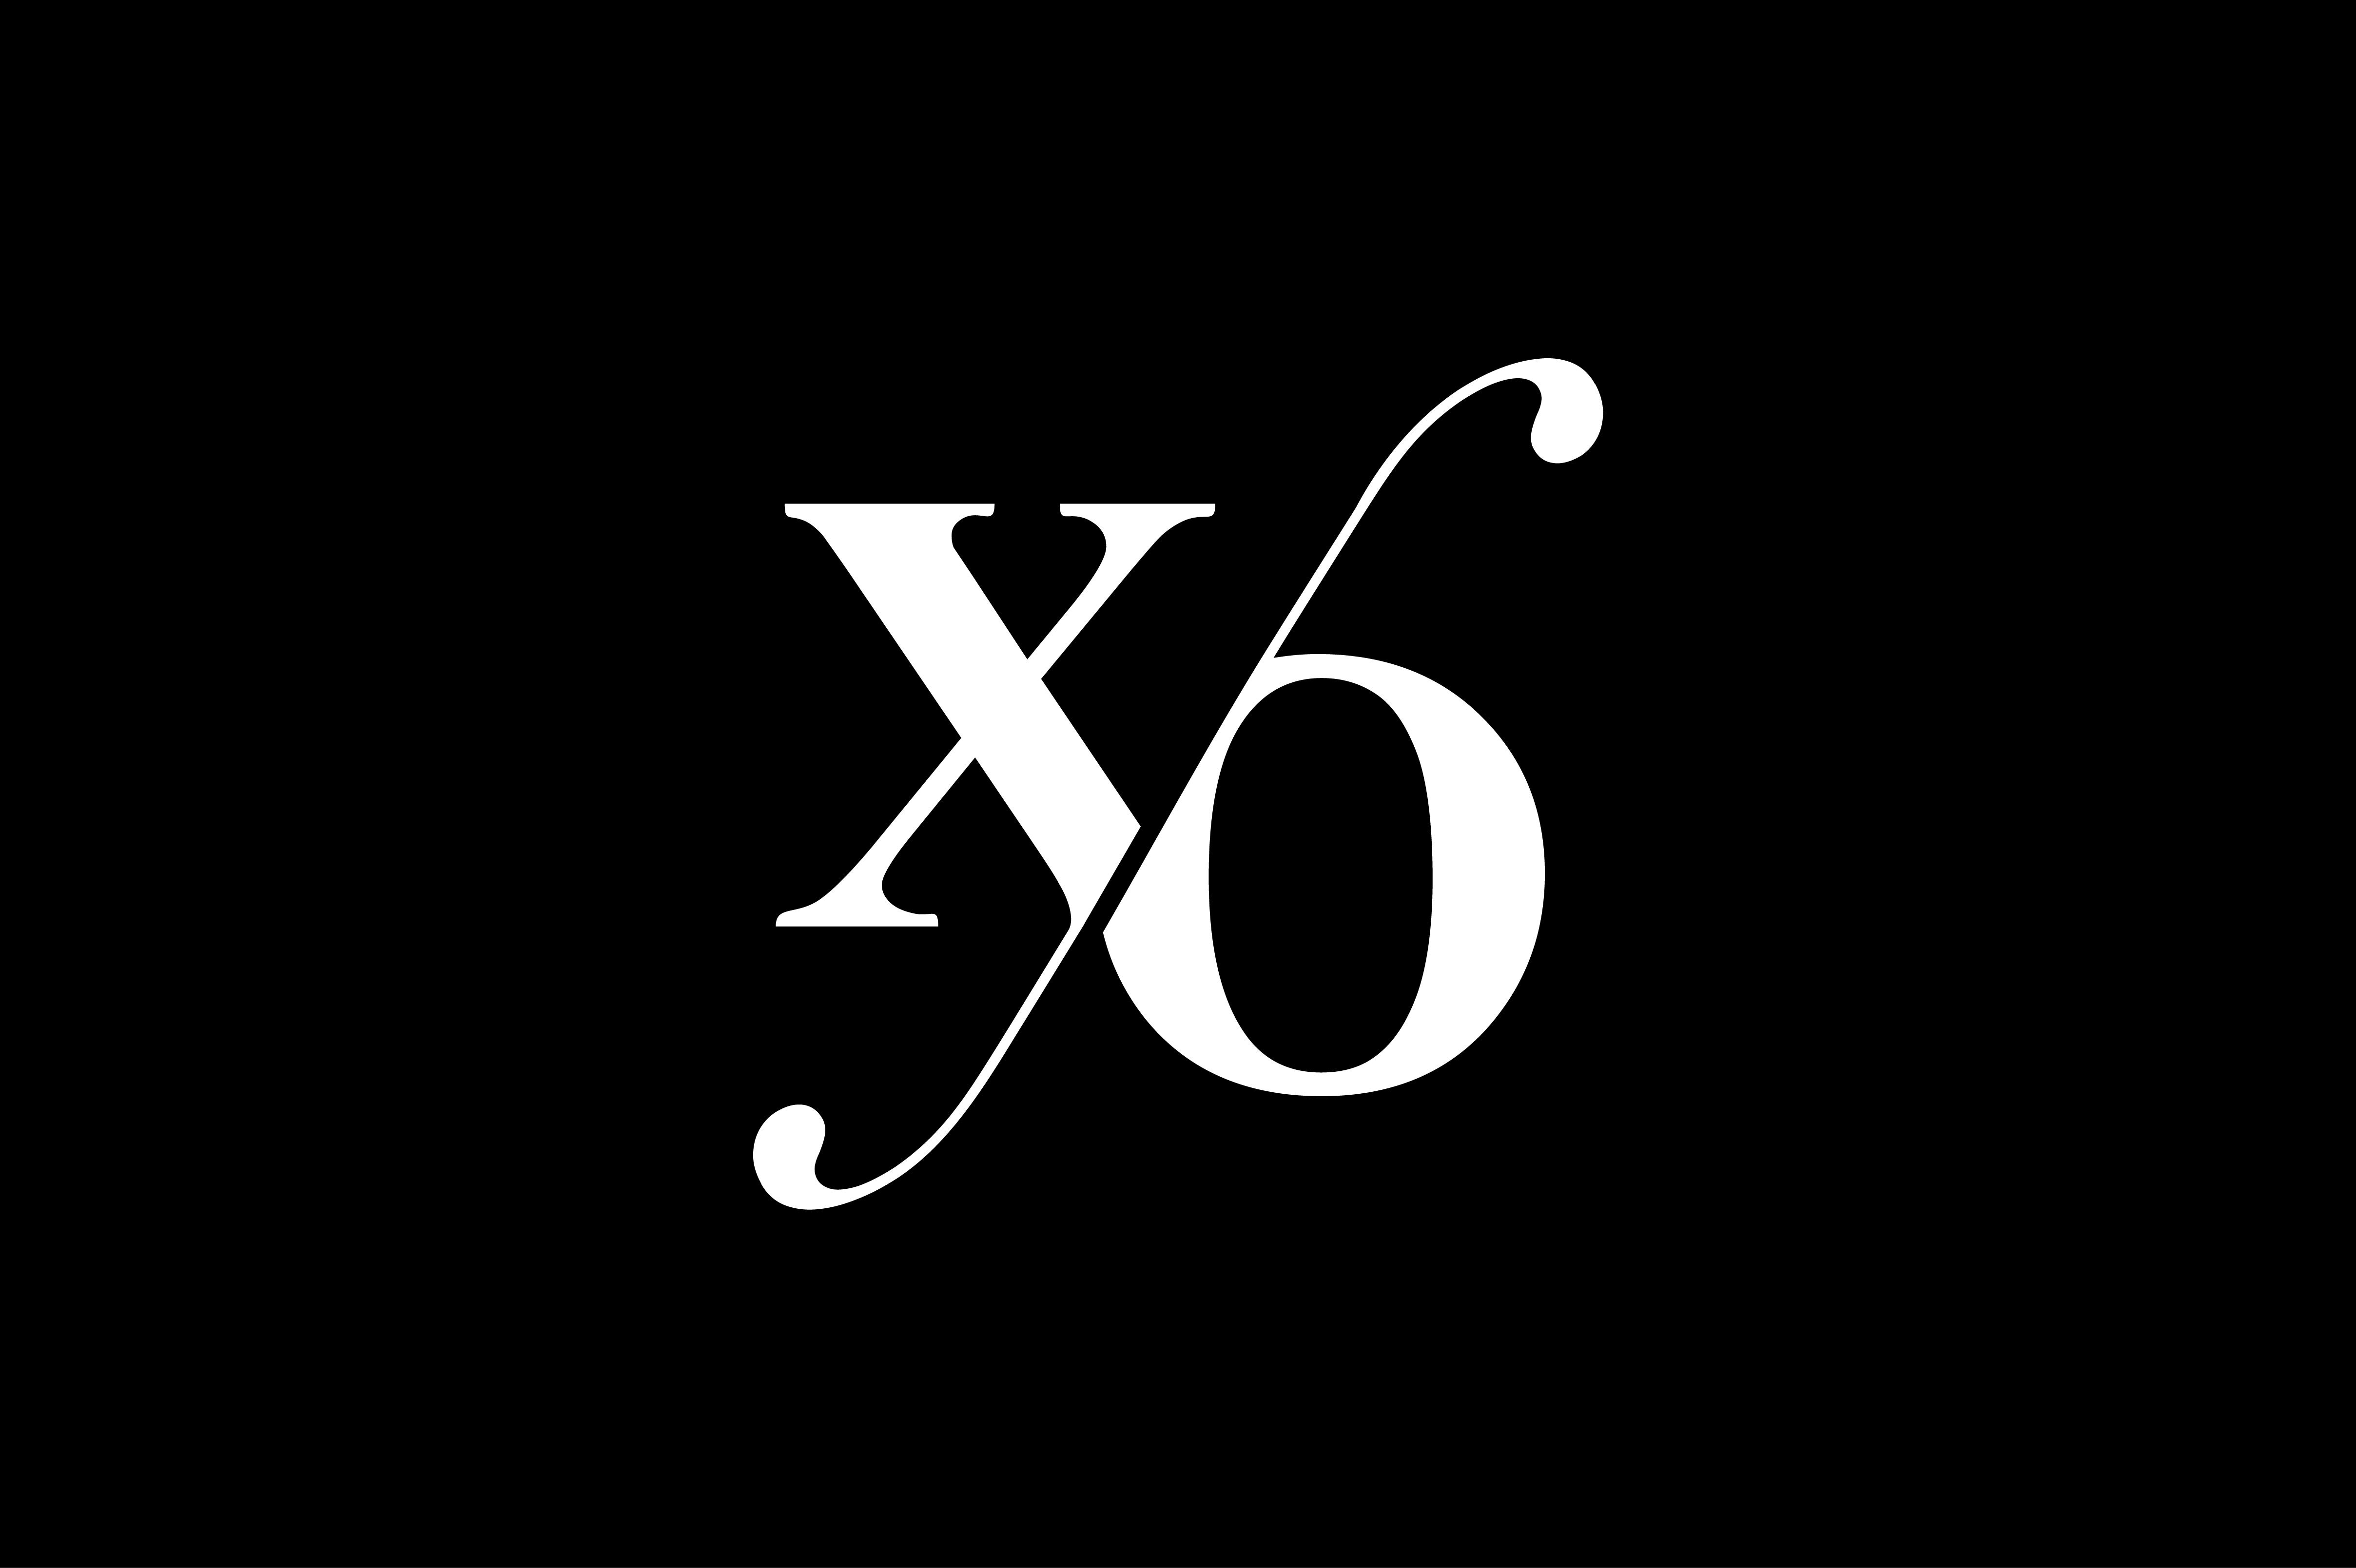 Xo Monogram Logo Design By Vectorseller Thehungryjpeg Com